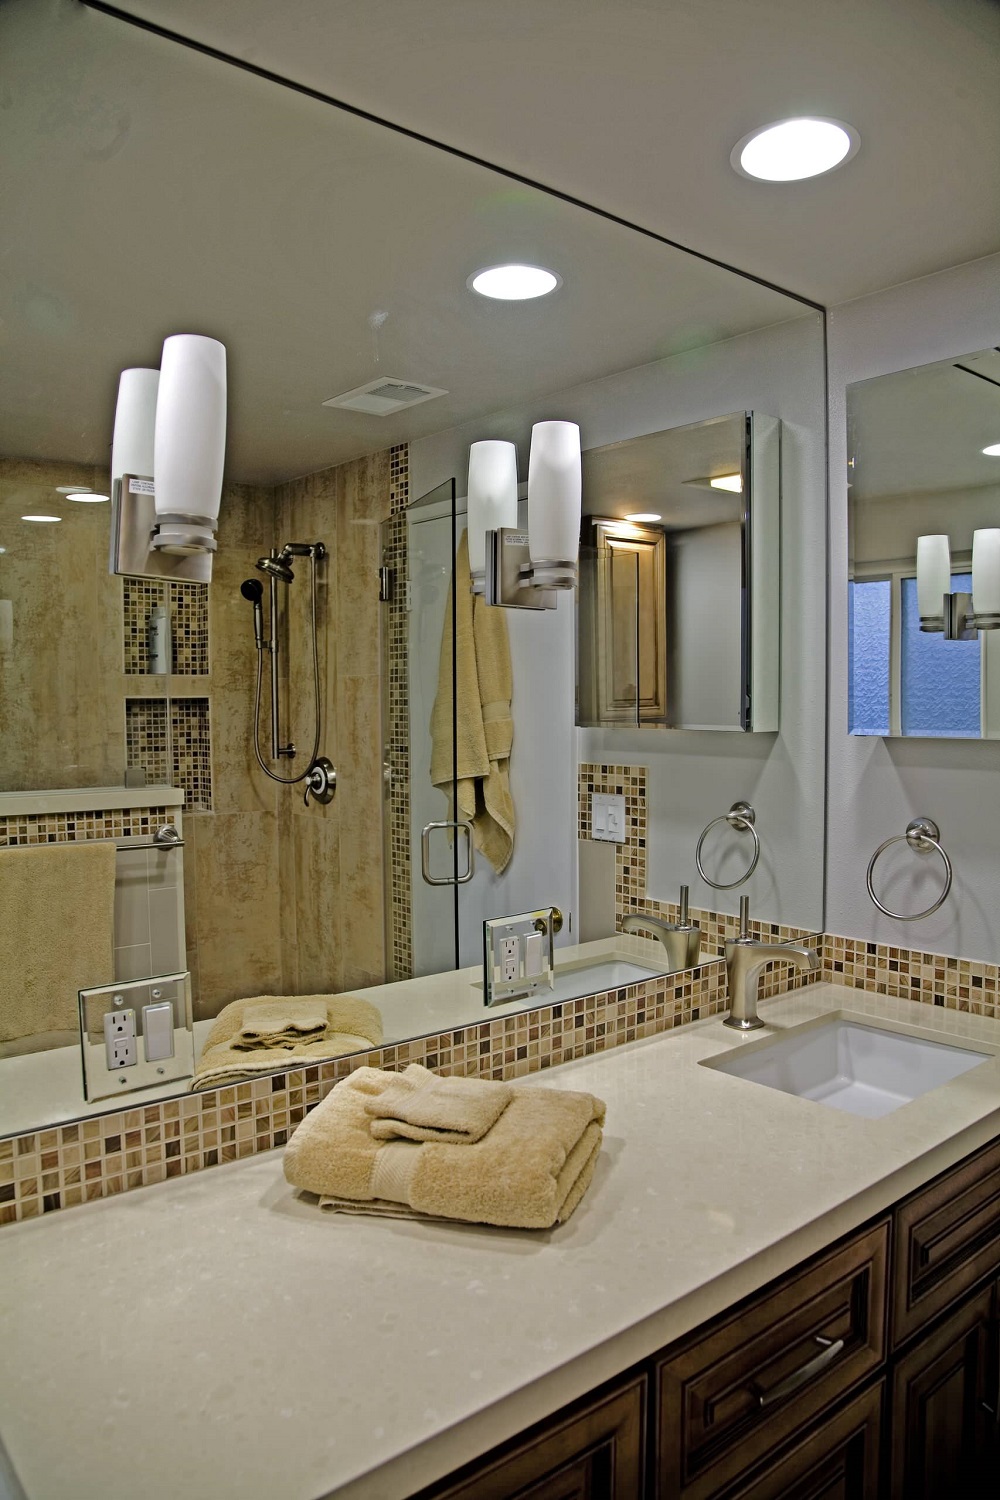 van13-1 Neat corner bathroom vanity ideas that you will find useful